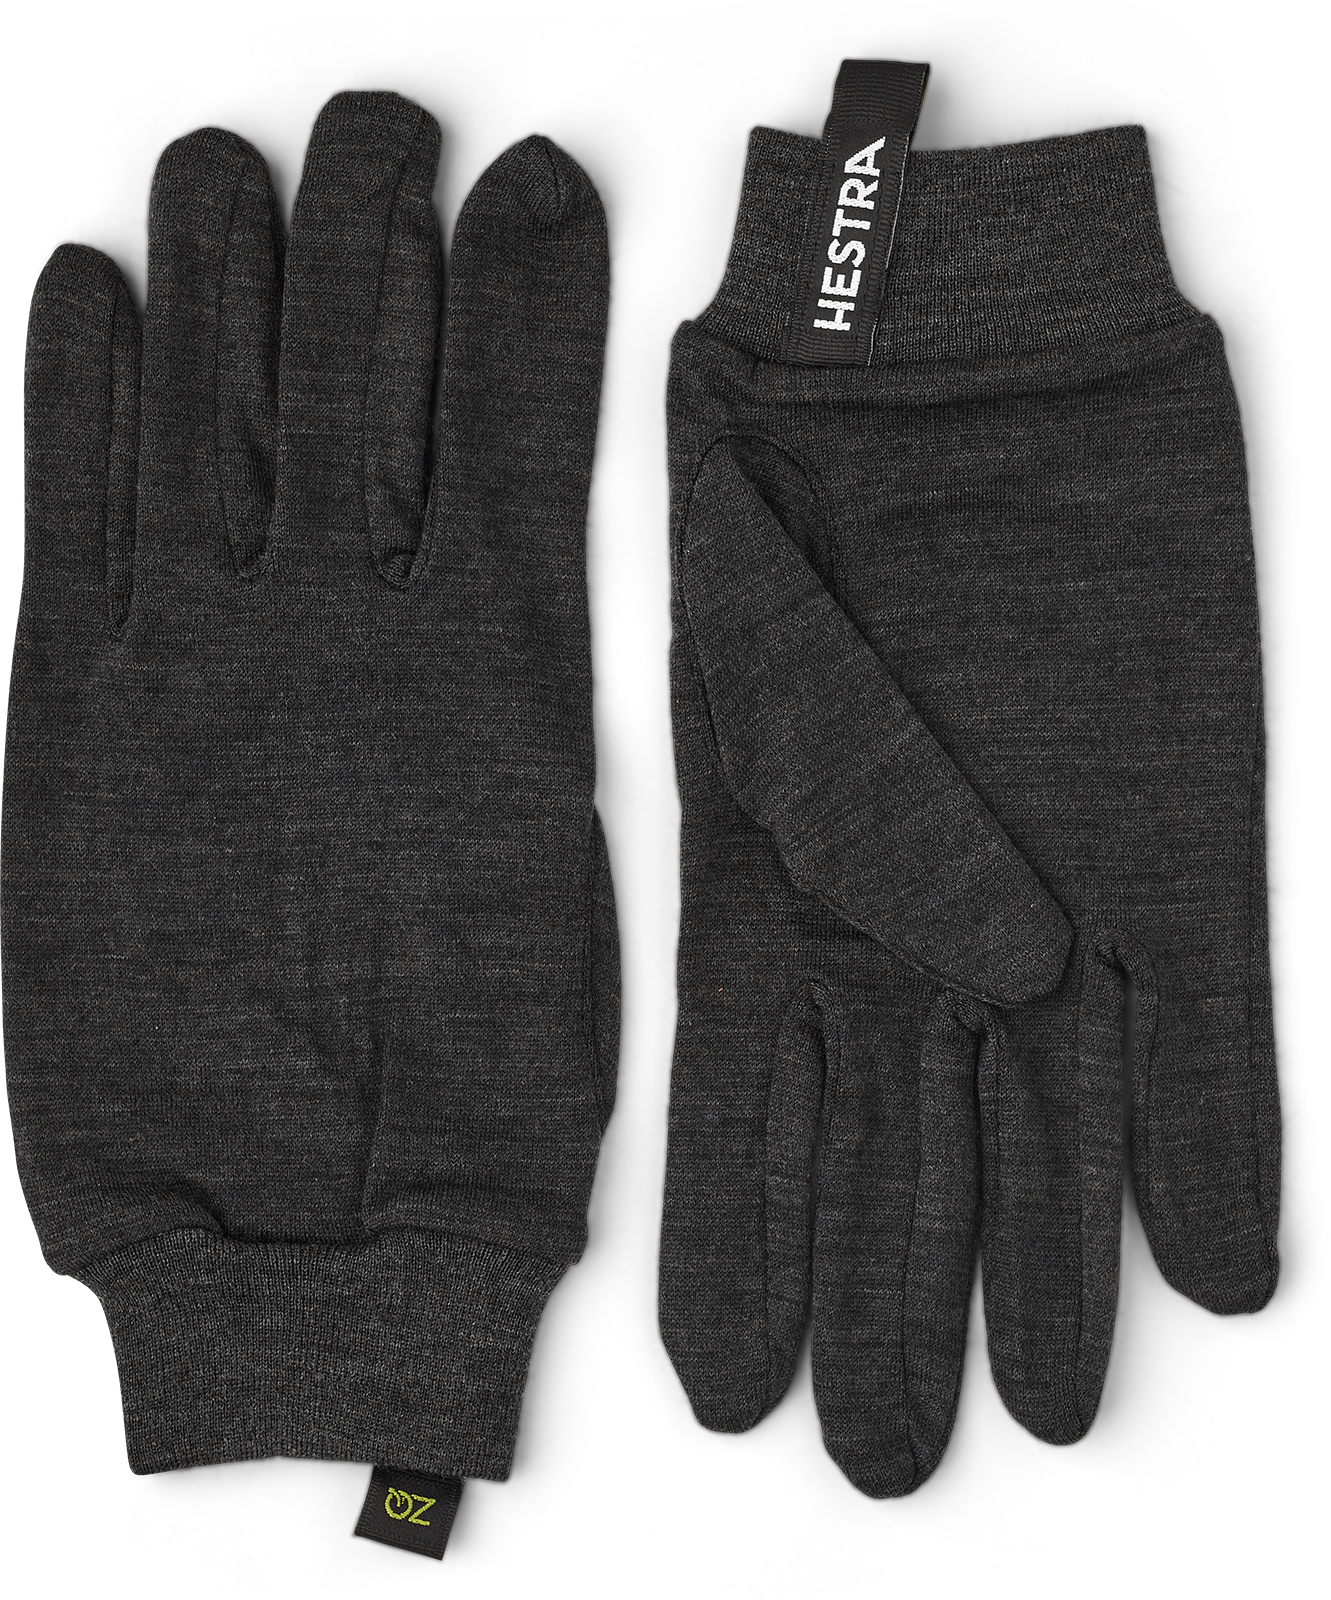 Merino Wool Liner Active 5-finger - Five-finger | Hestra Gloves